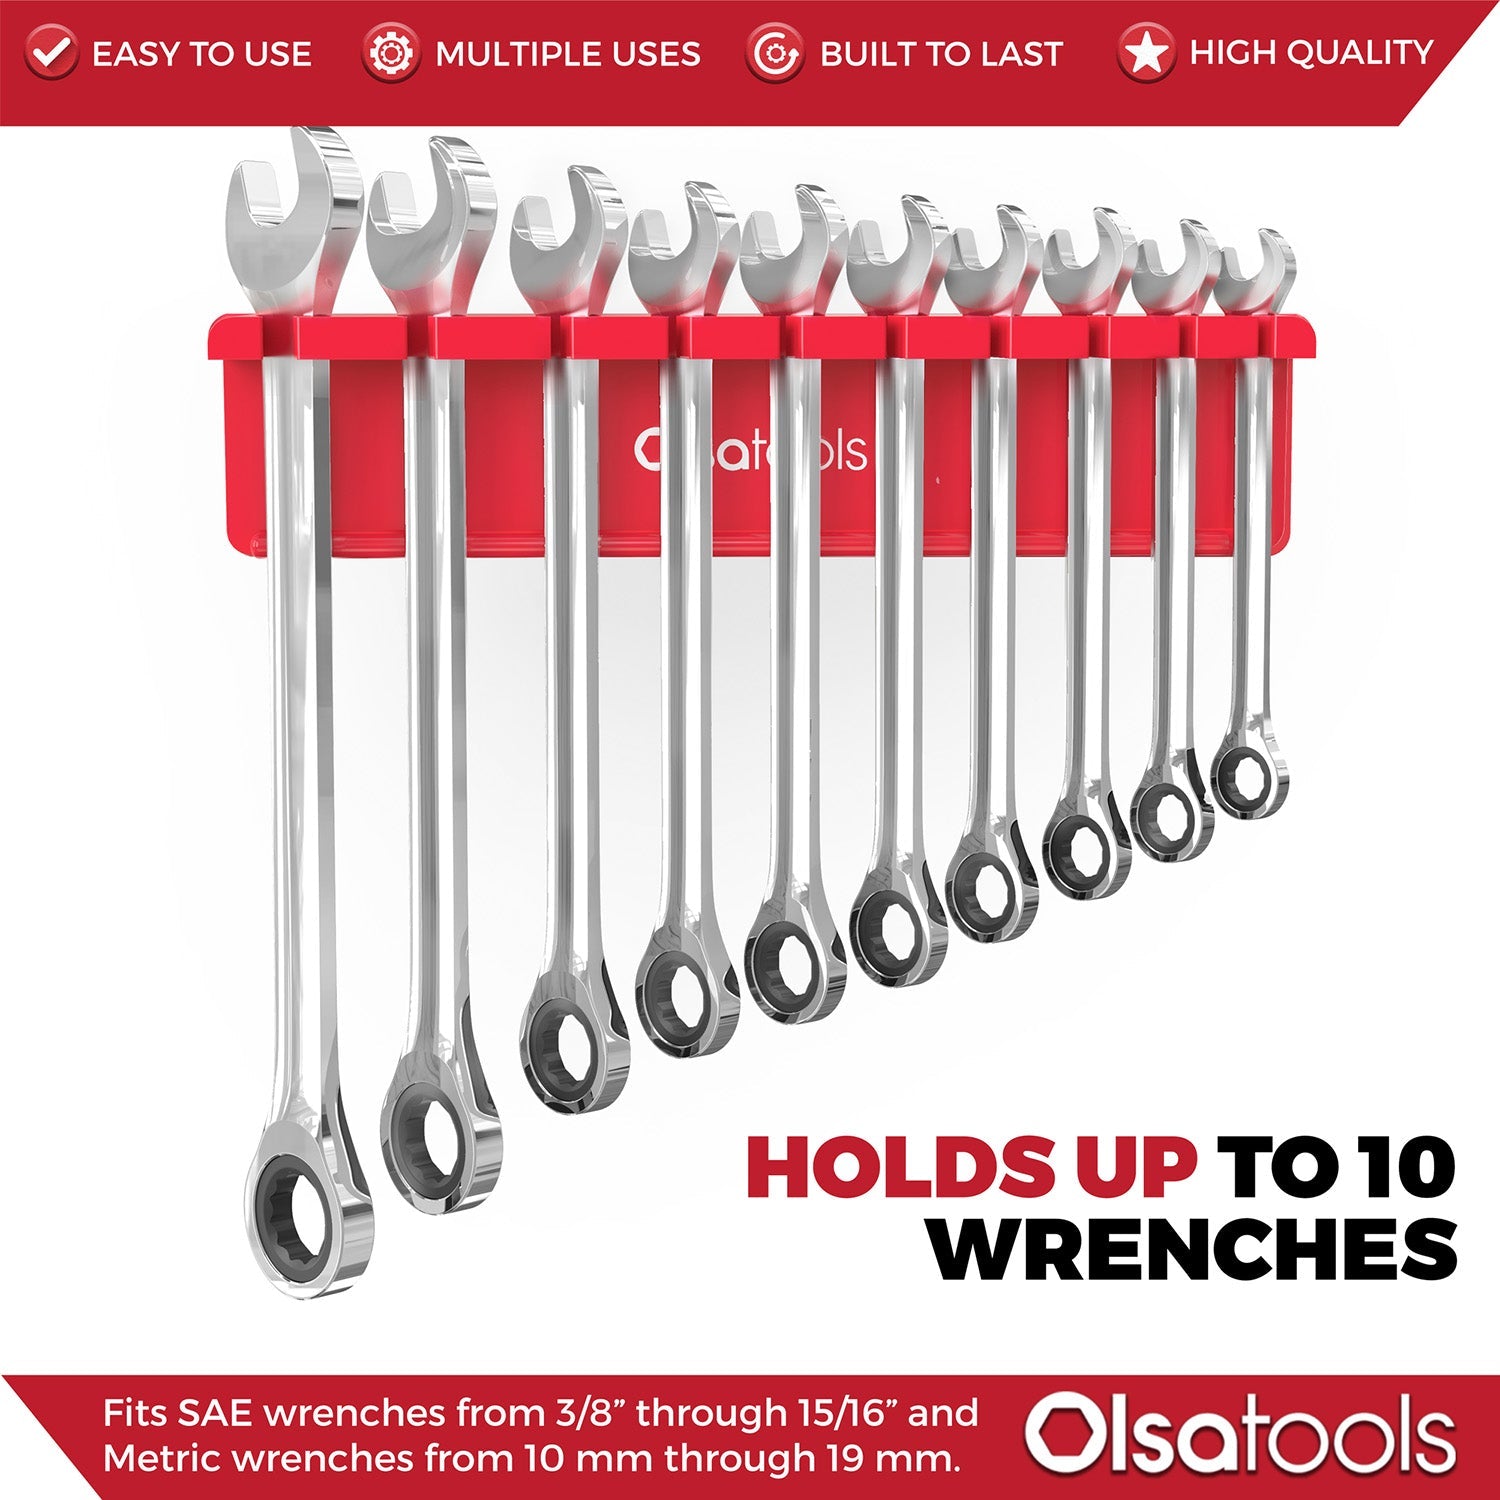 Best Tool Organizers For Mechanics Toolbox, Garage & Workshop – Olsa Tools